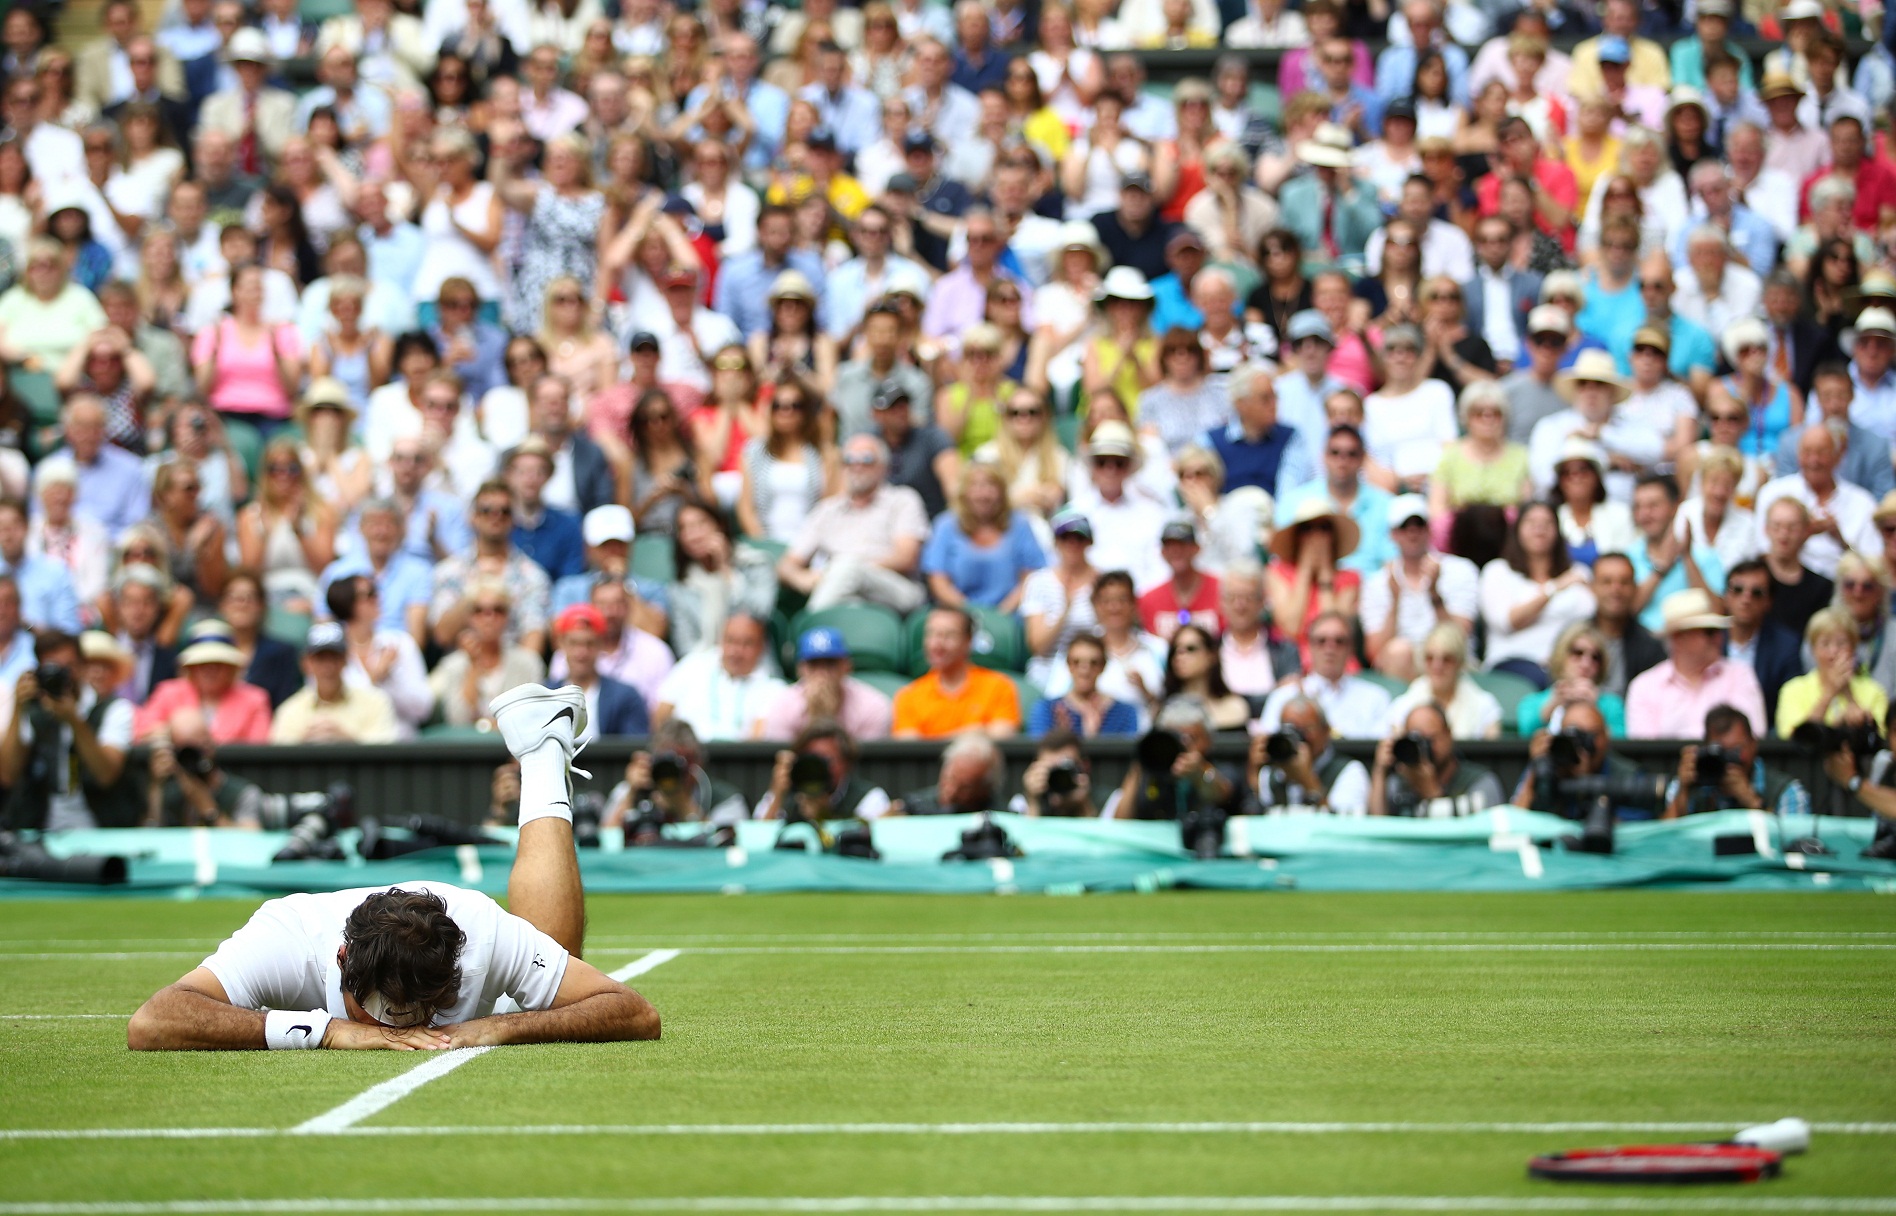 ویمبلدون 2016 - Wimbledon 2016 - راجر فدرر - Roger Federer